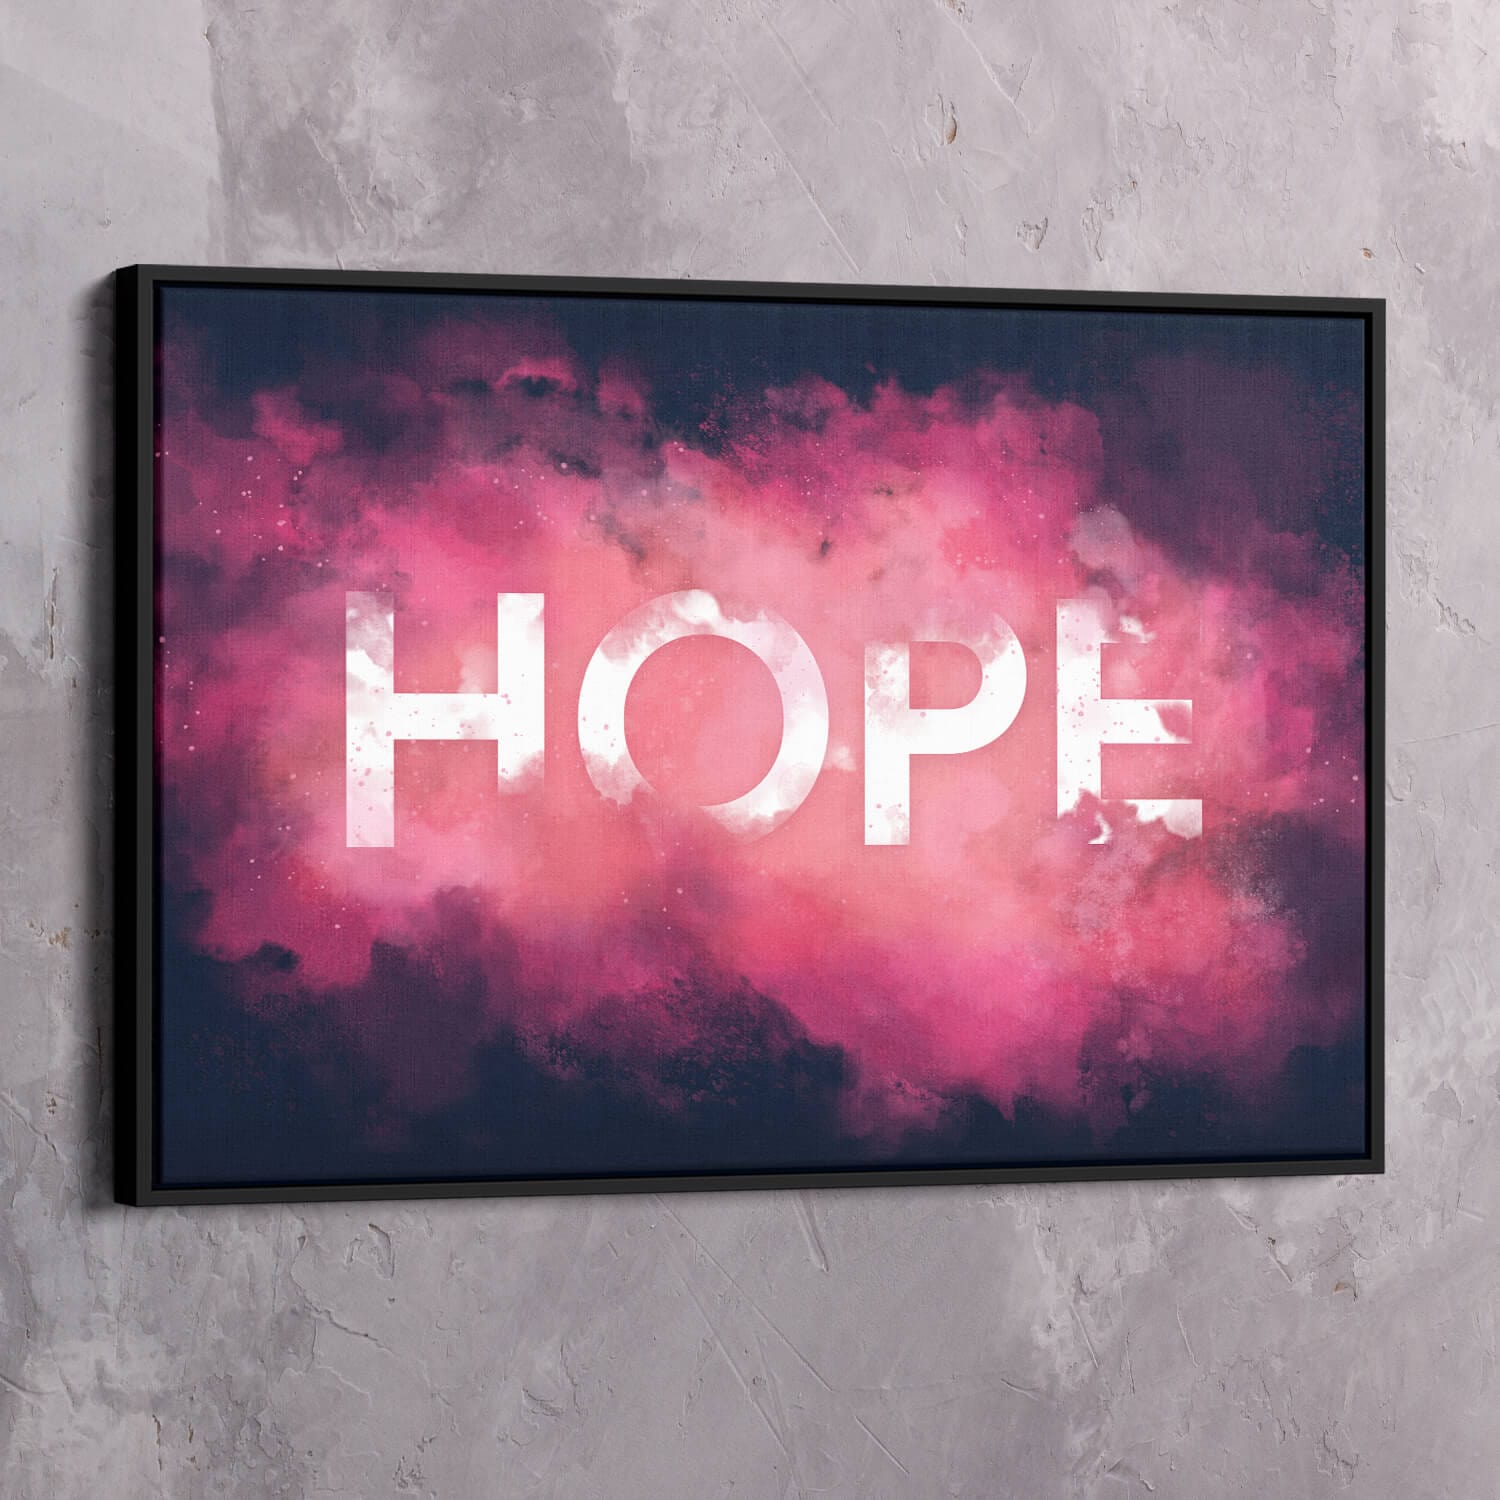 HOPE Smoke Wall Art | Inspirational Wall Art Motivational Wall Art Quotes Office Art | ImpaktMaker Exclusive Canvas Art Landscape